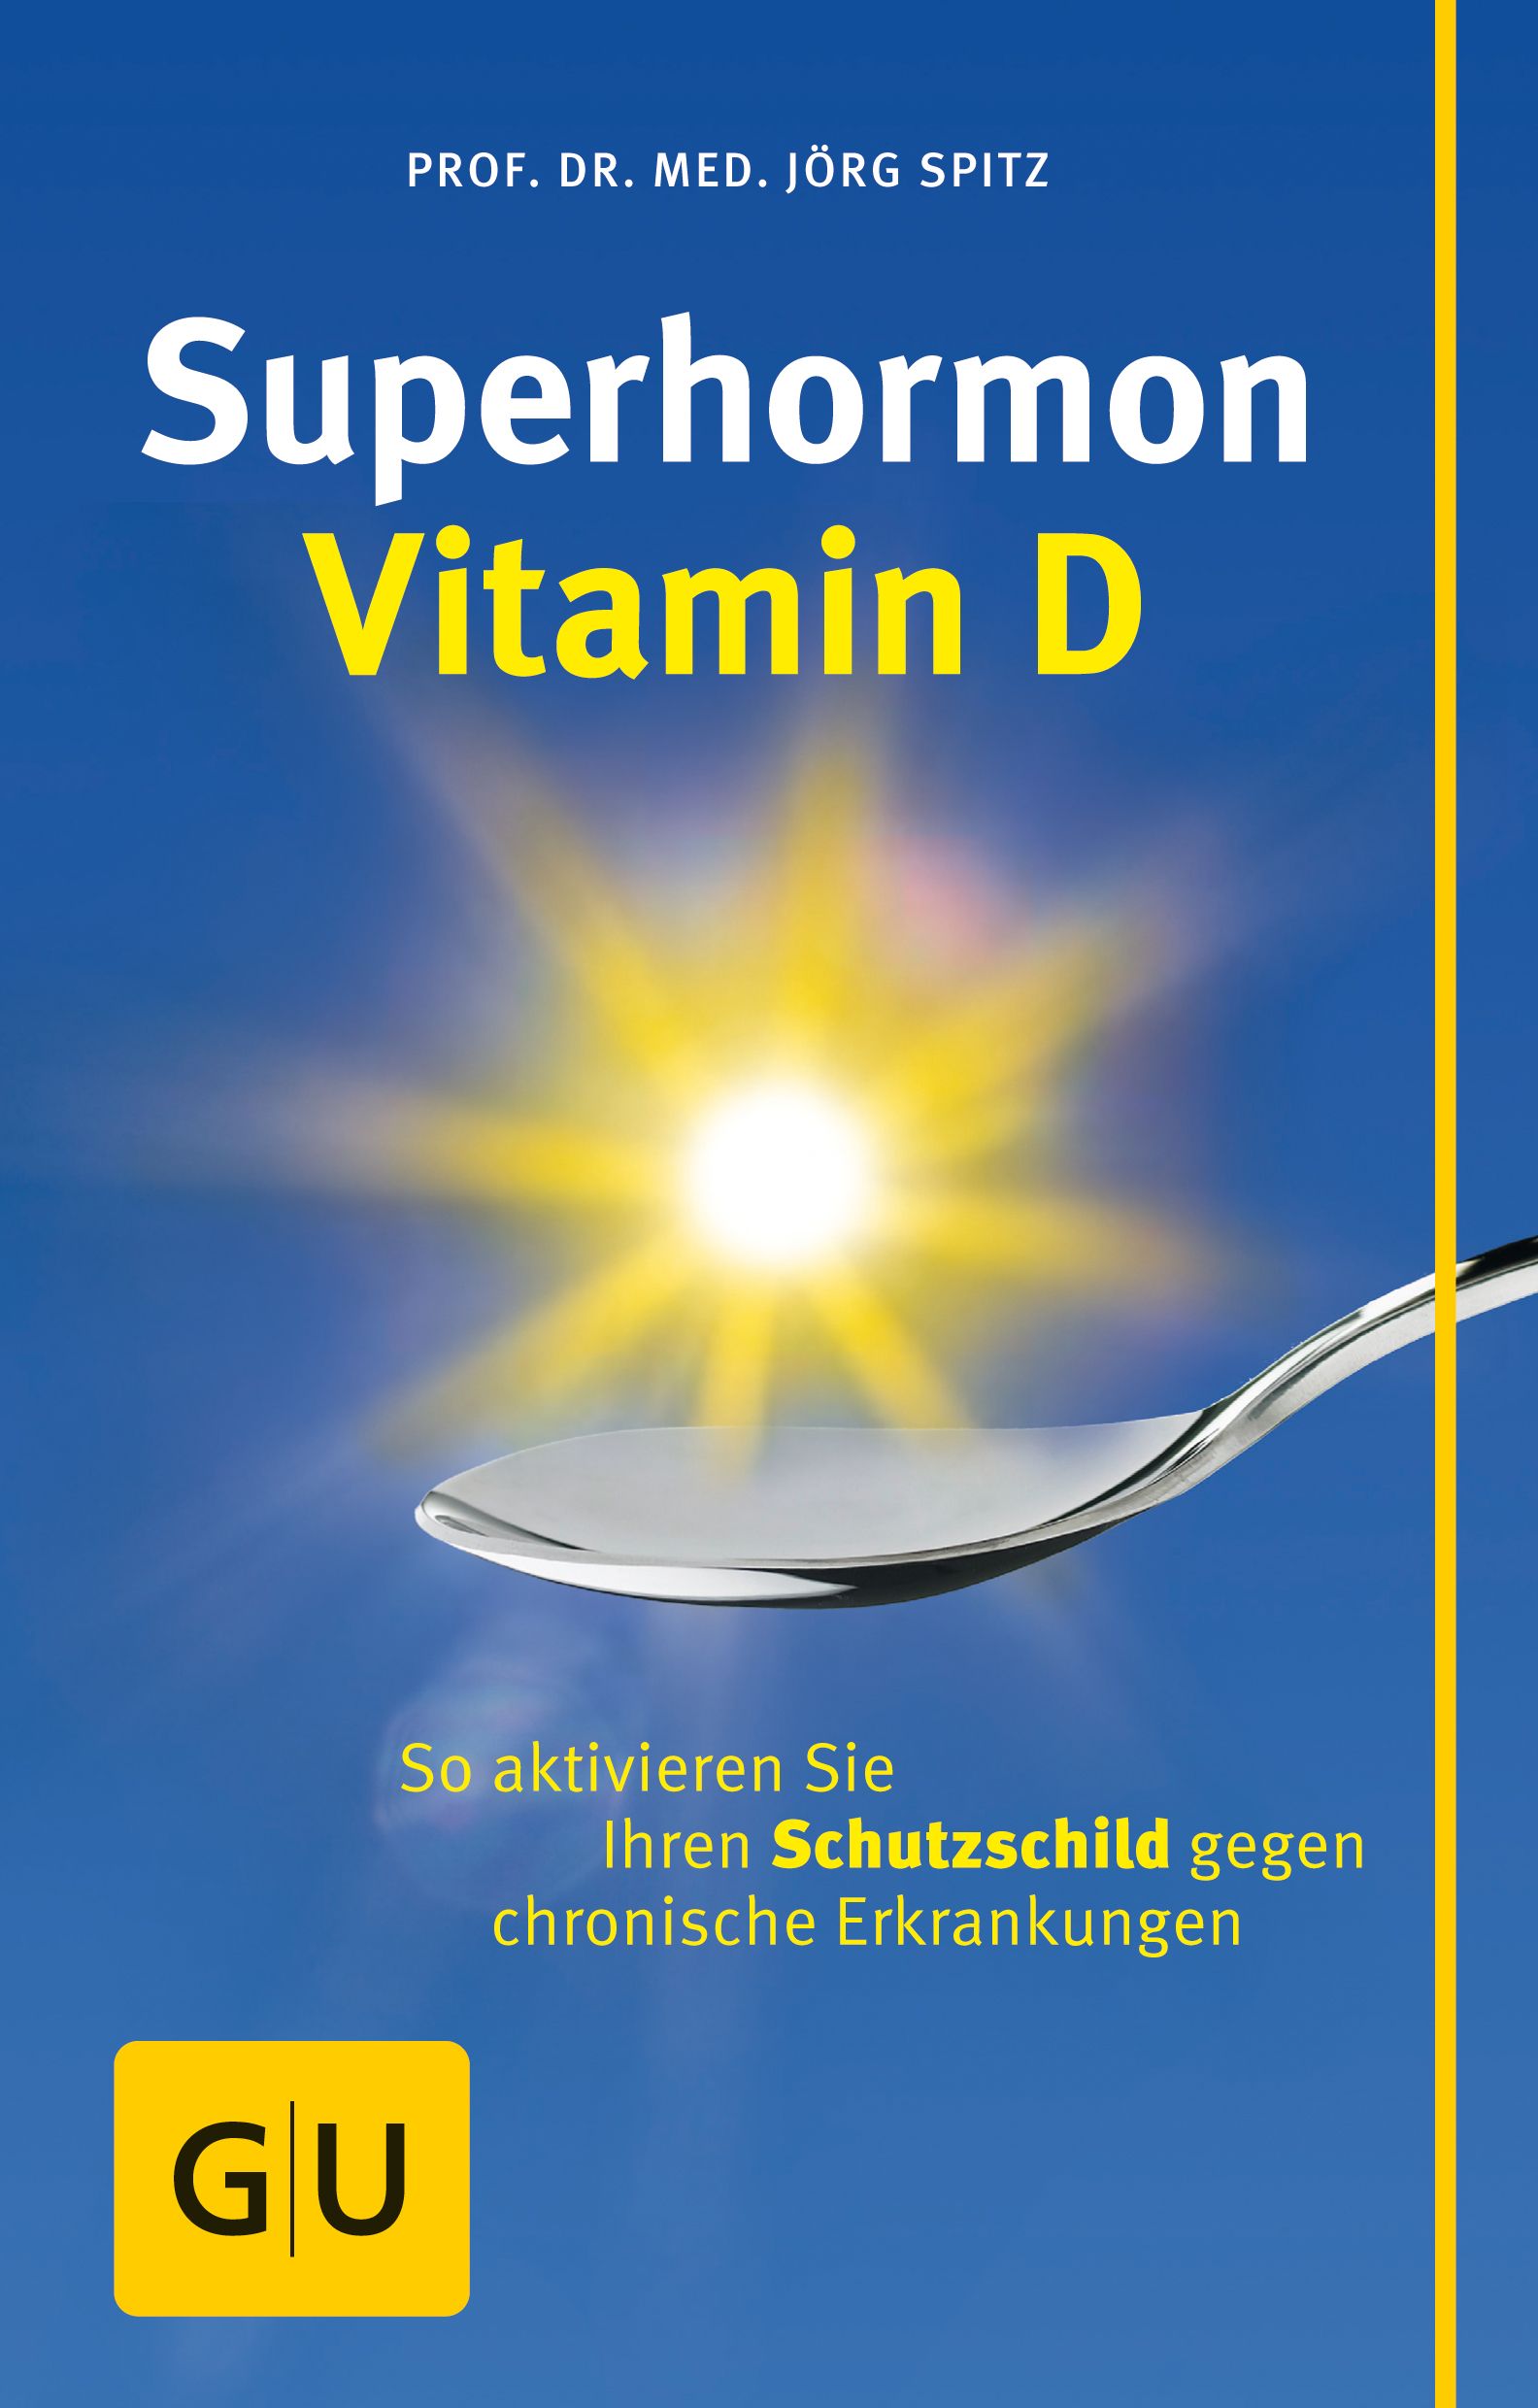 GU Superhormon Vitamin D